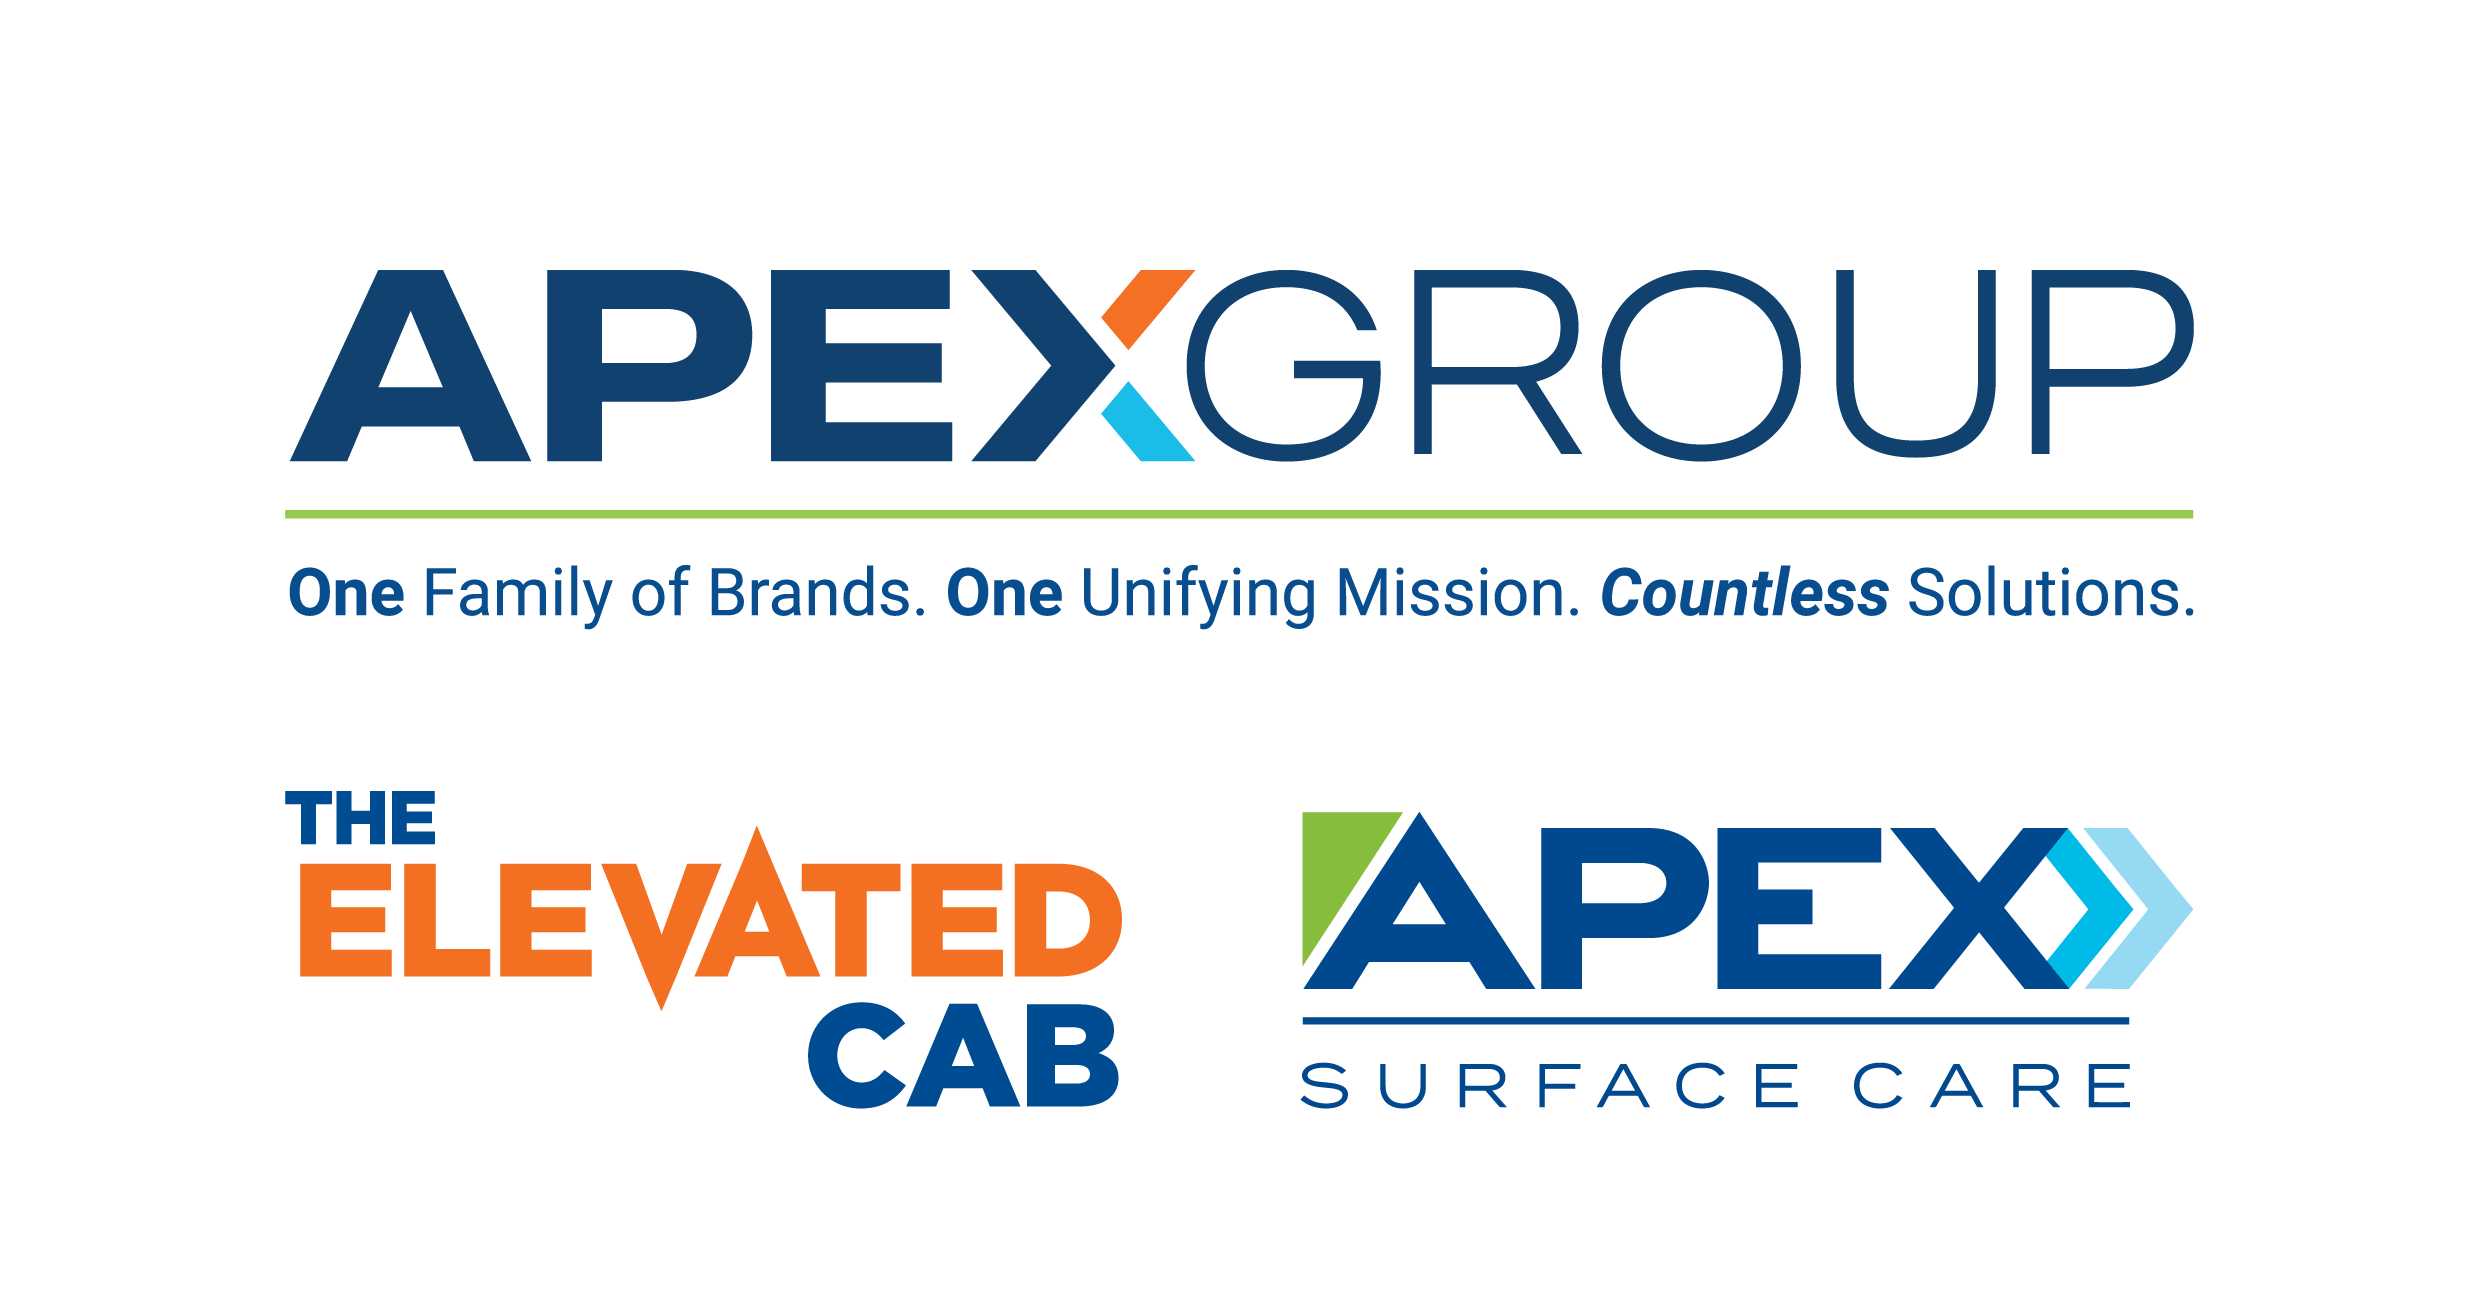 Apex Group